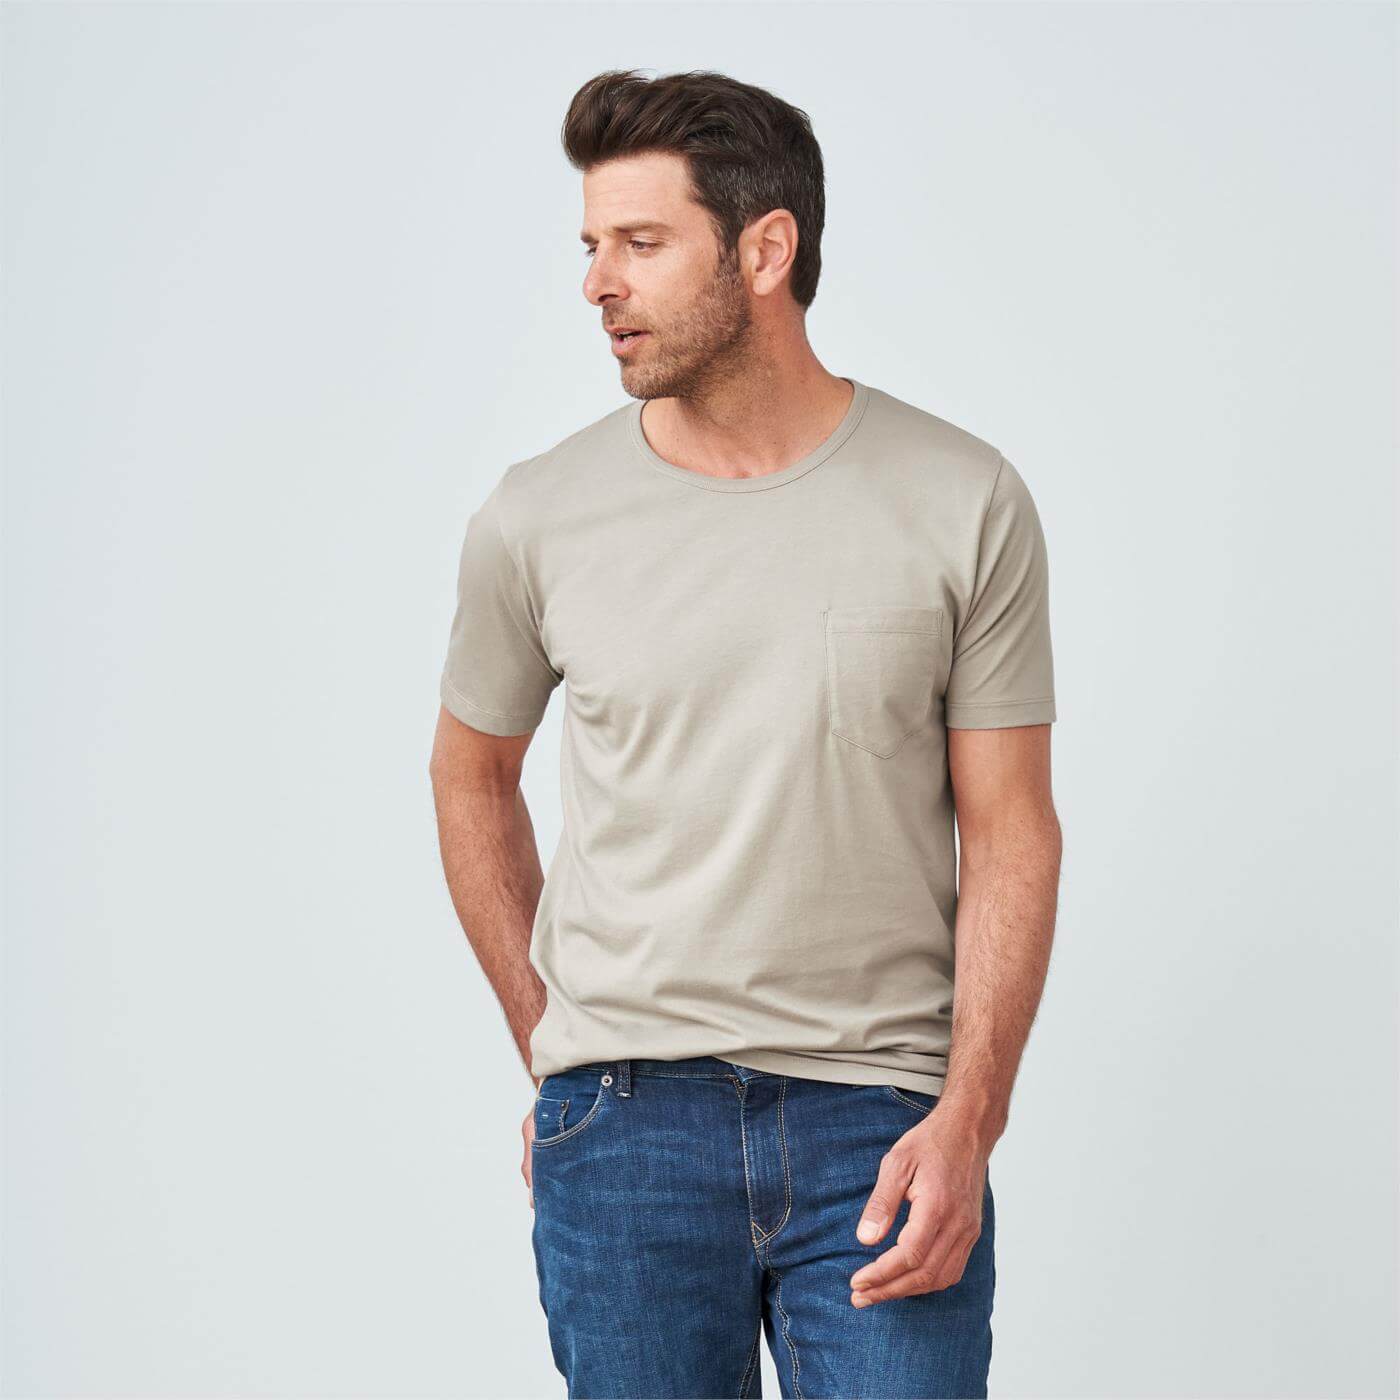 Jim-2 - Pima cotton - T-shirt